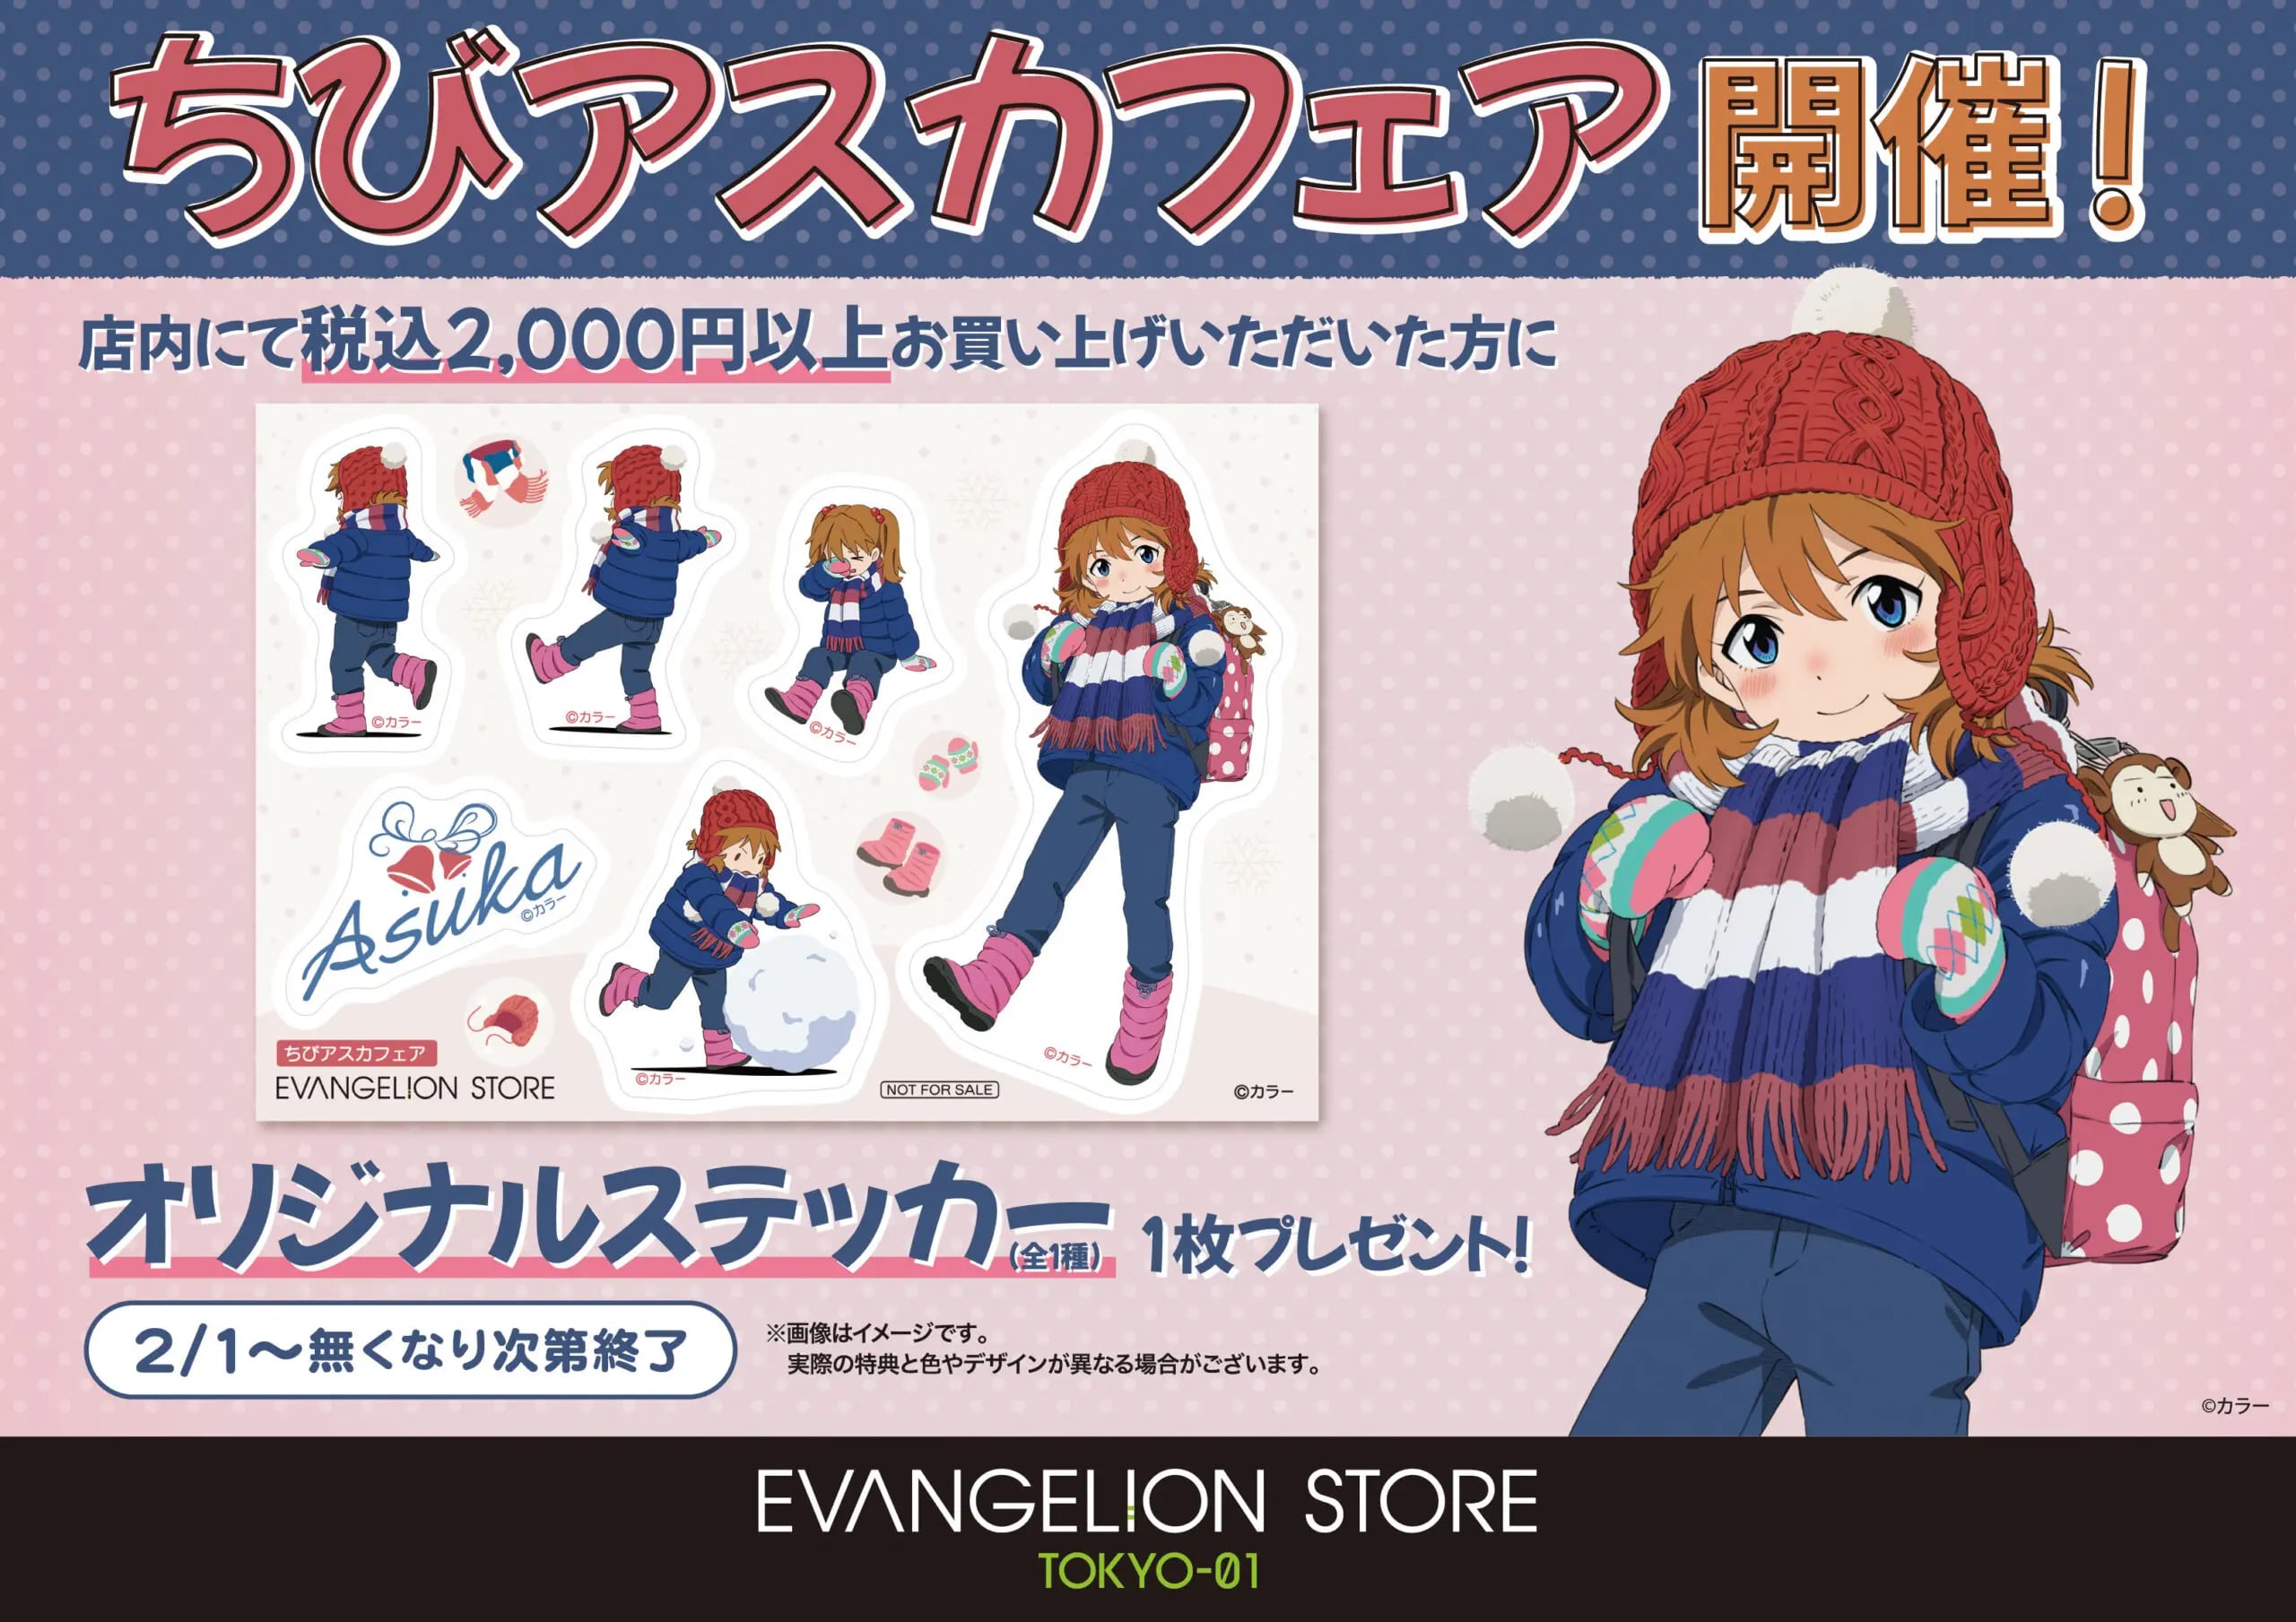 EvangelionBR - Chibi Asuka chega à Evangelion Store